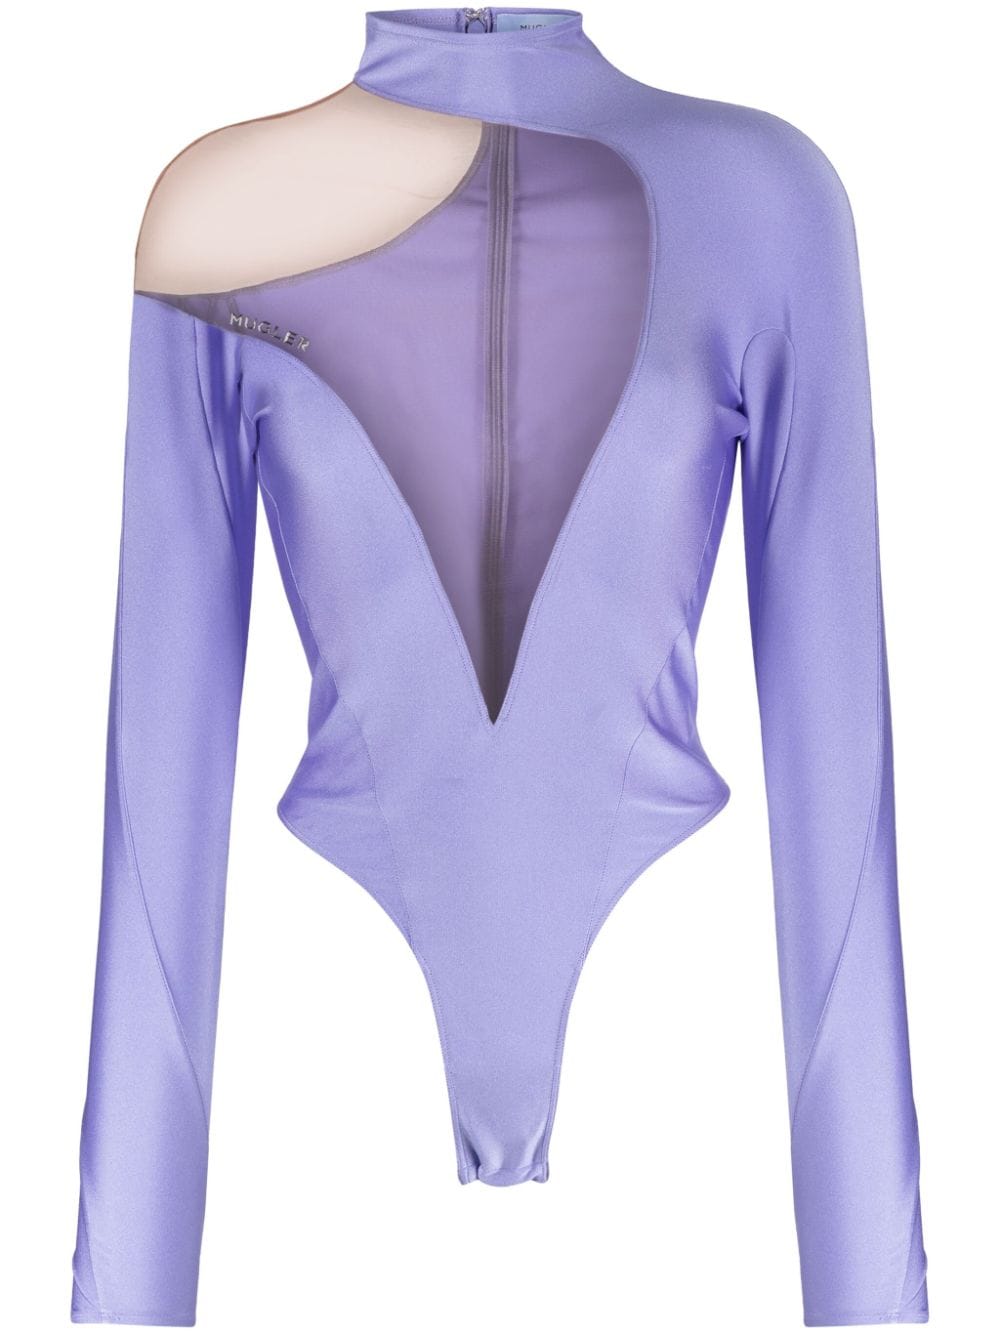 Mugler Illusion Stretch Bodysuit in Lilac & Nude 02, Purple. Size 34 (also  in ).